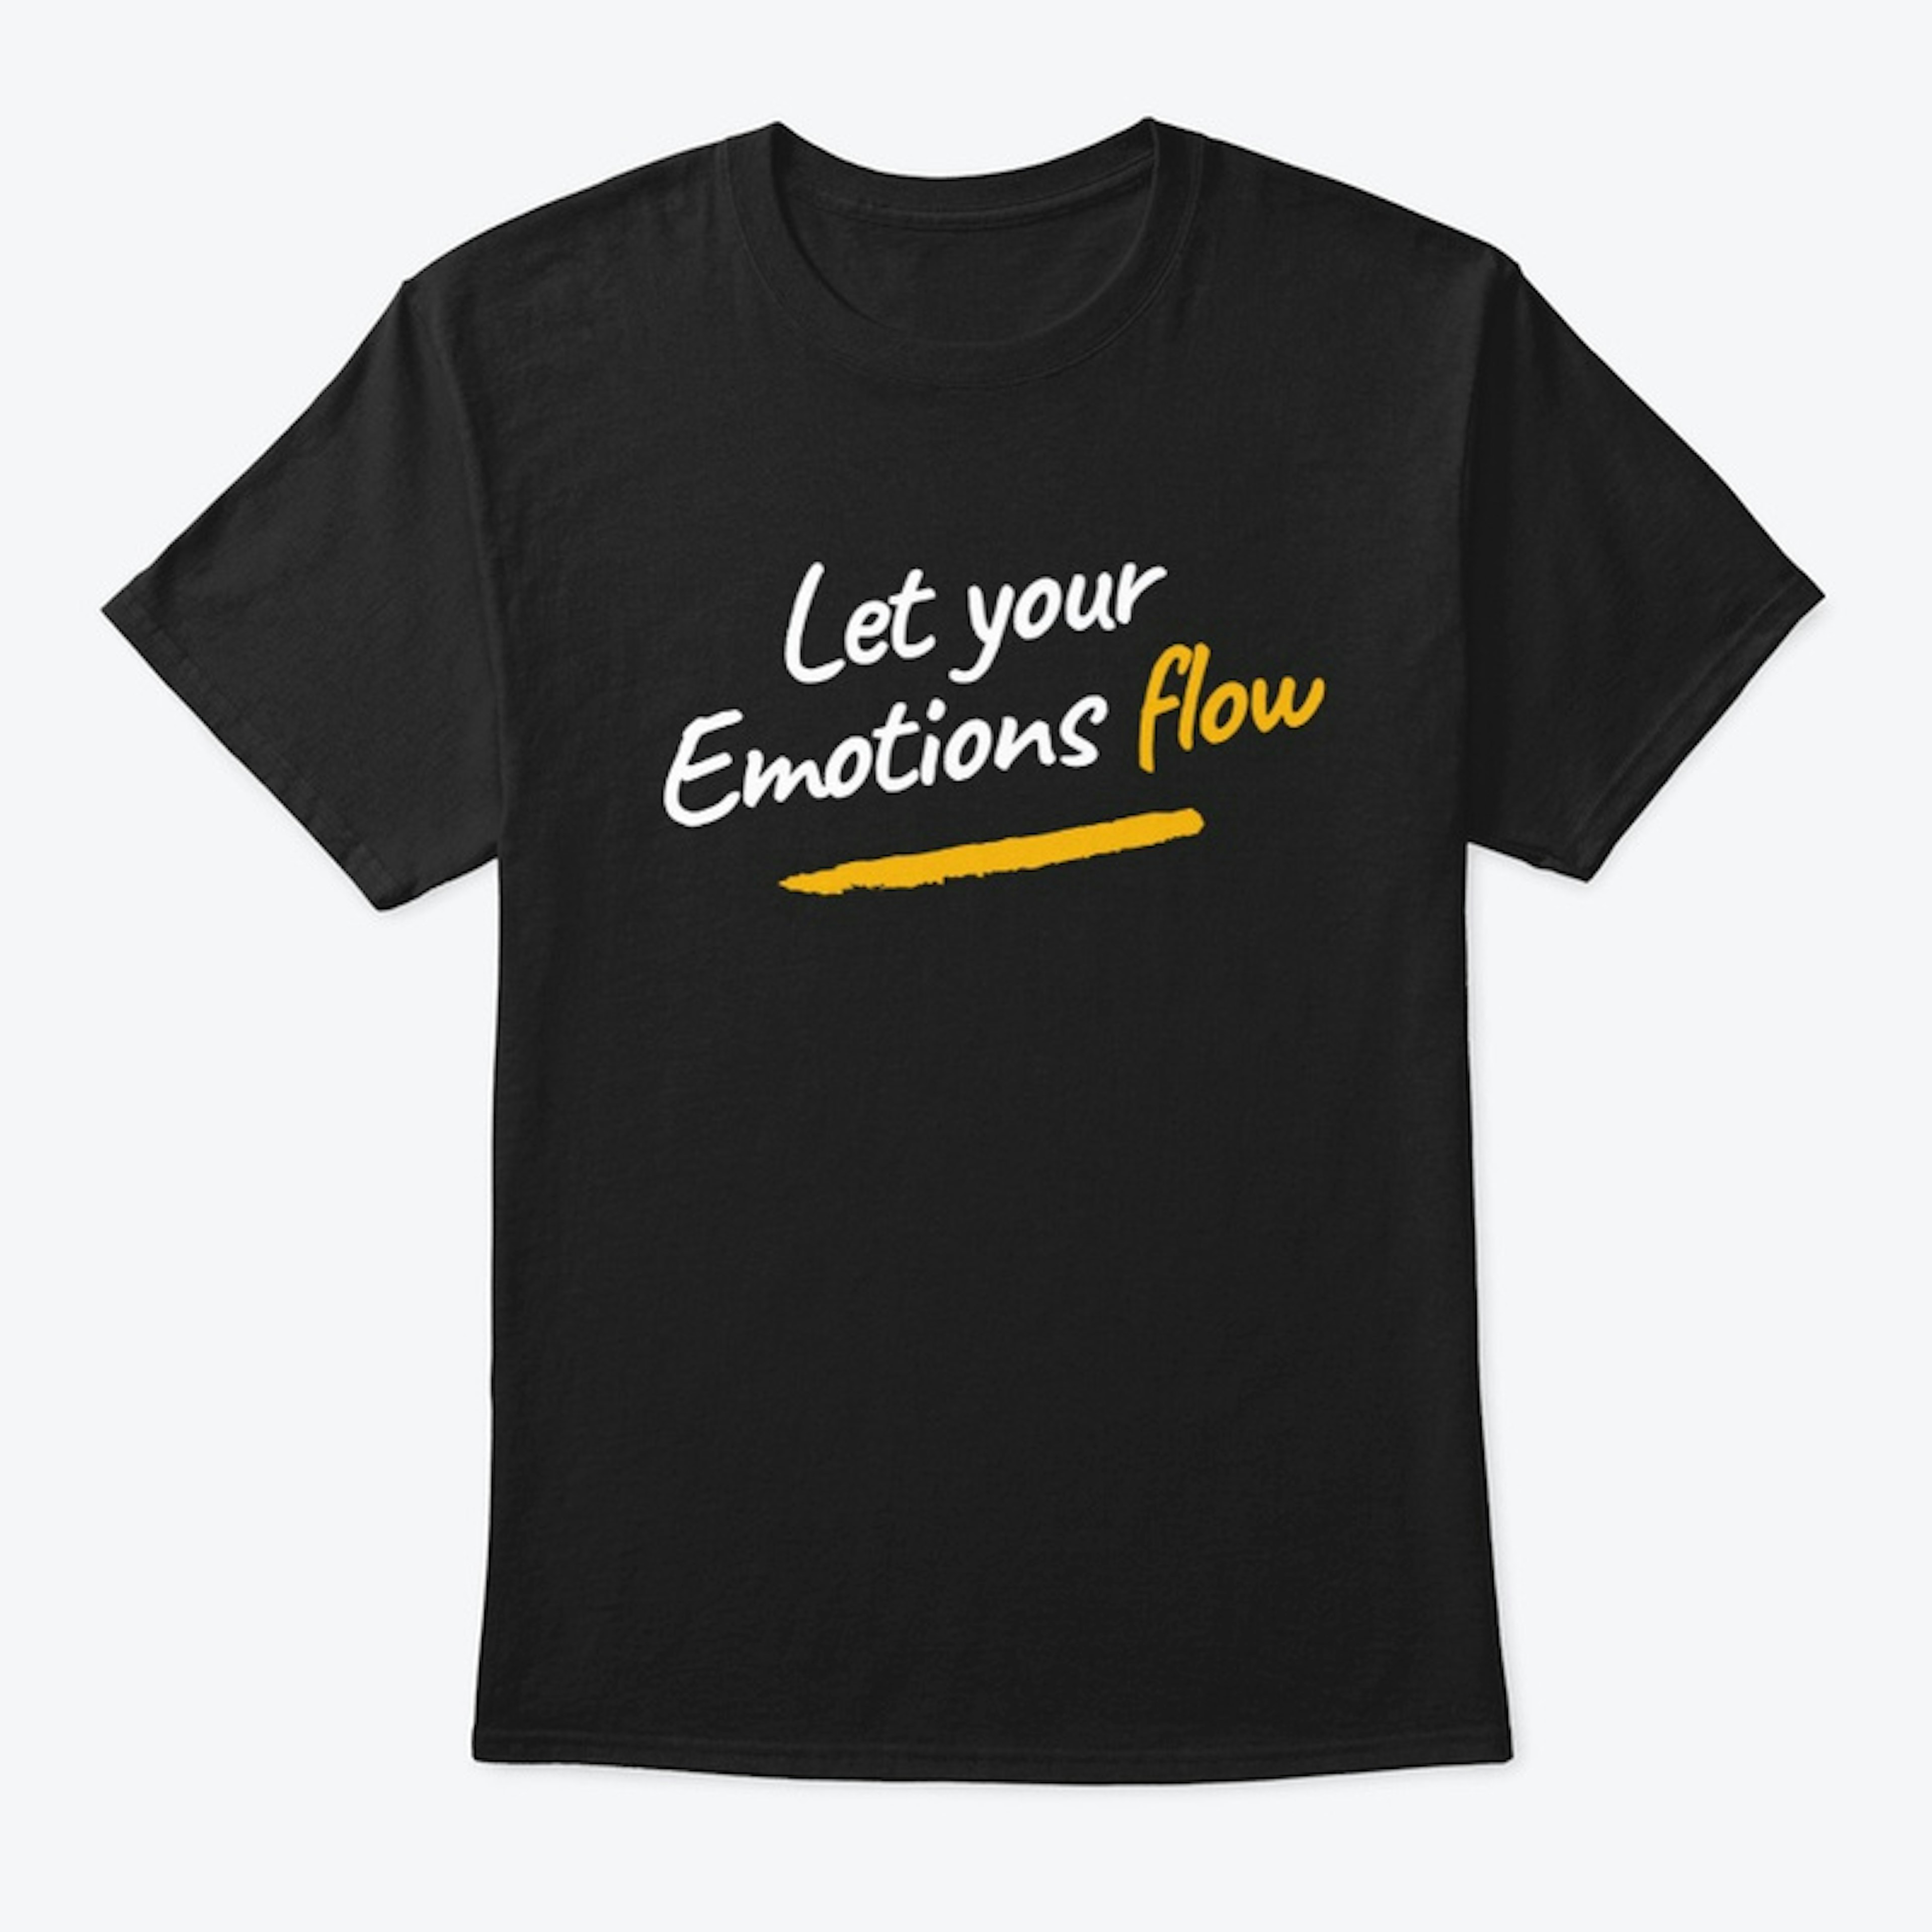 Let your emotions flow T shirt